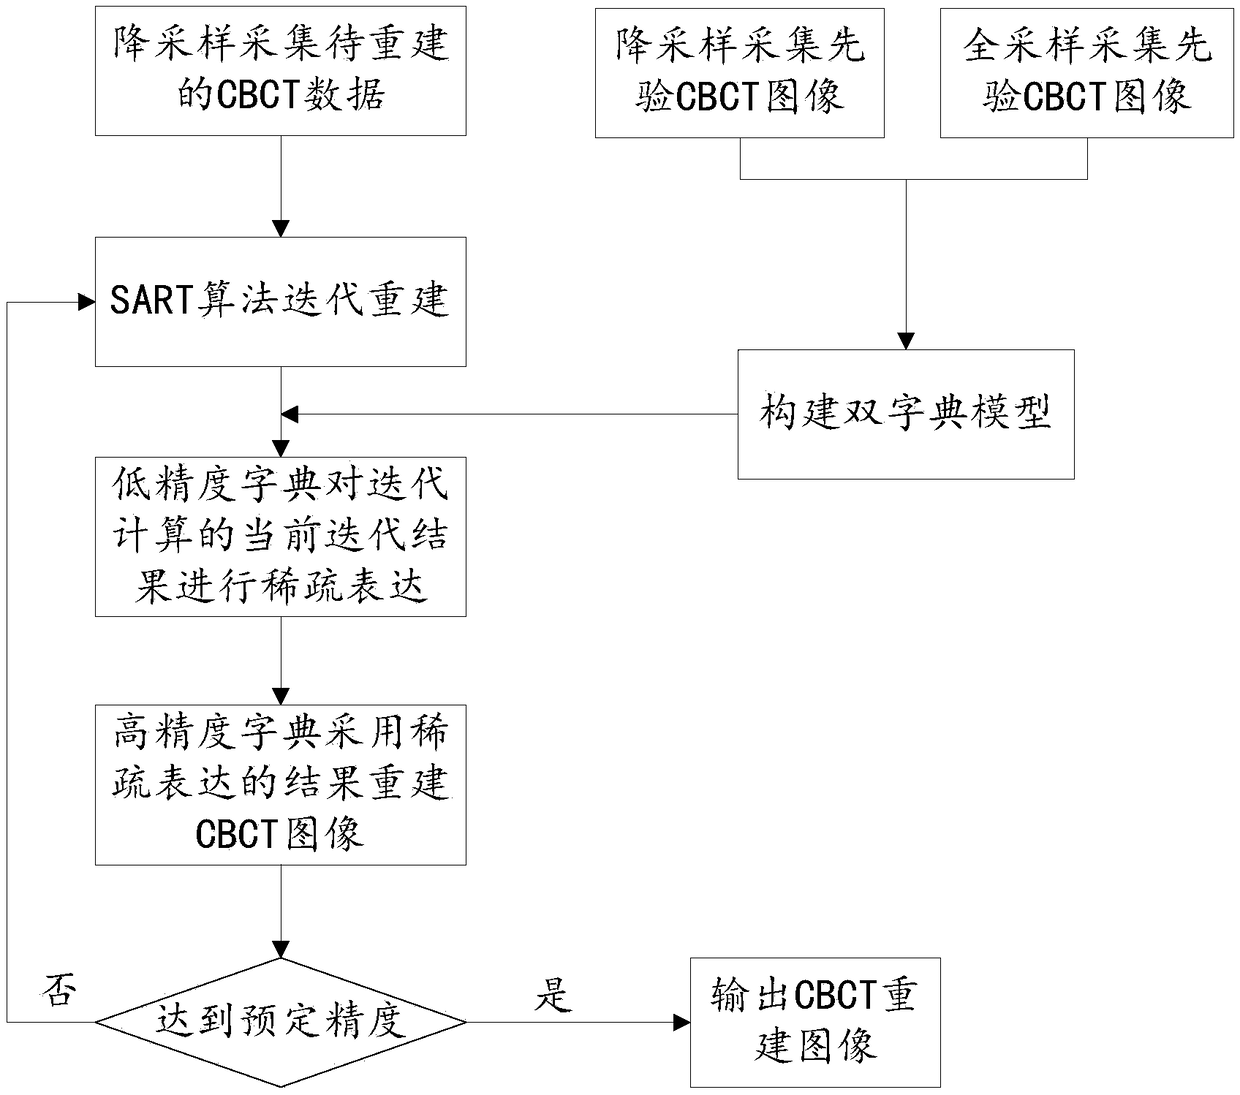 CBCT image reconstruction method based on compressed sensing